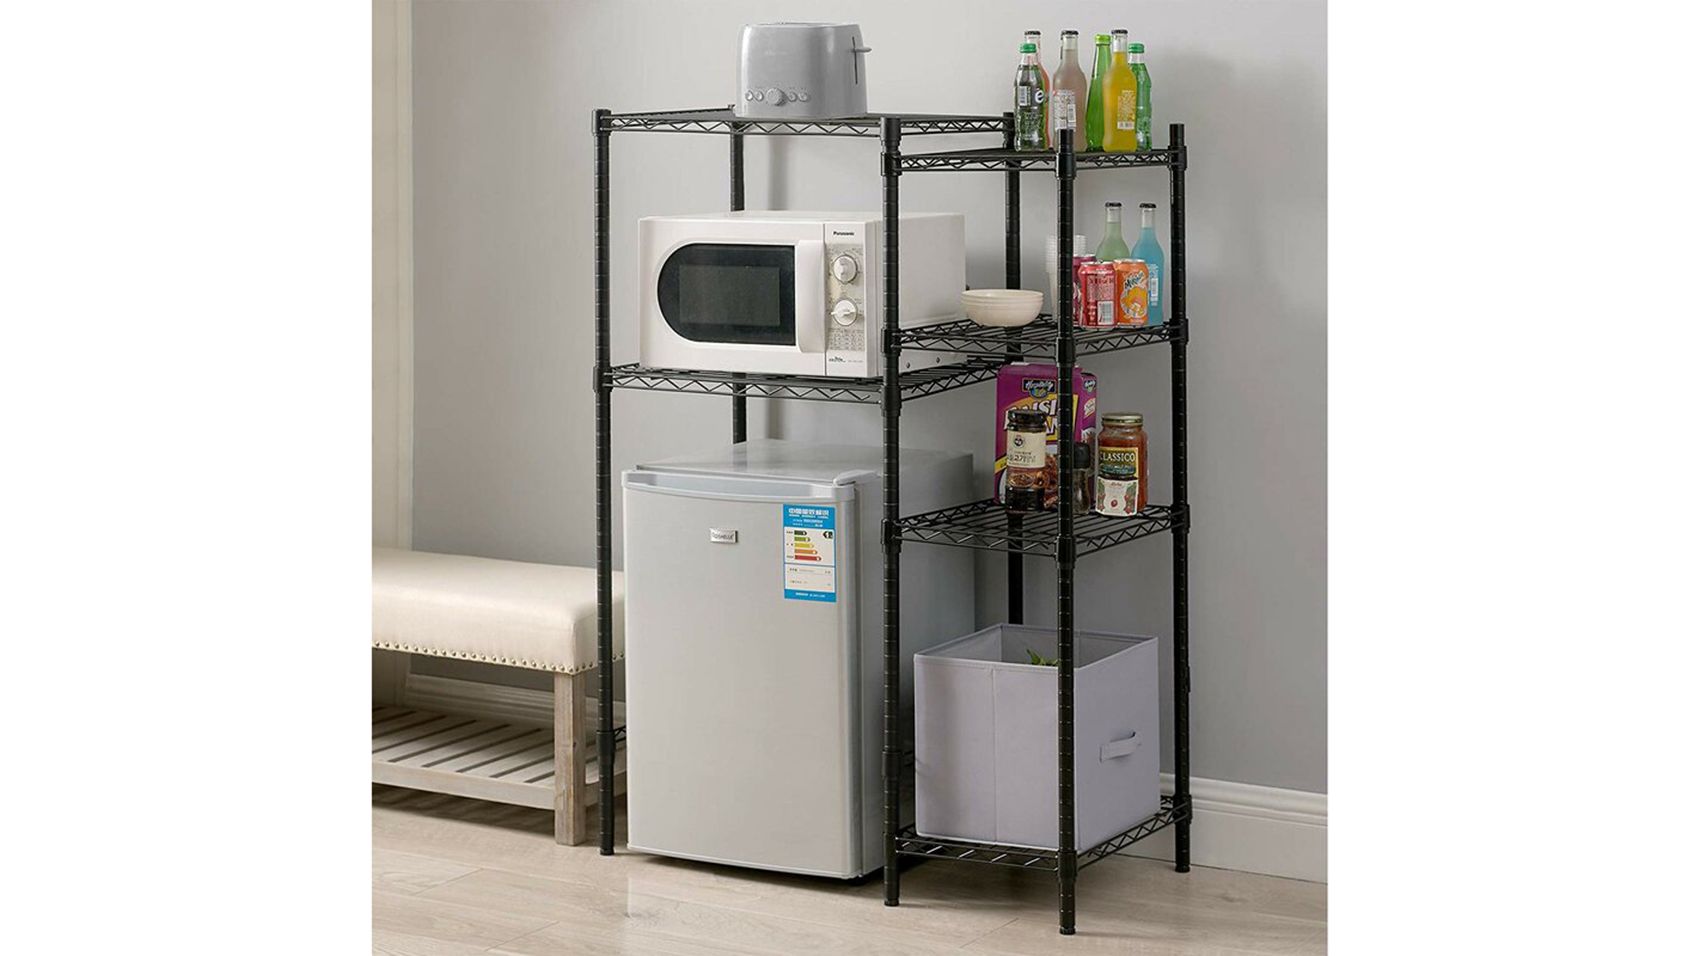 Dorm Room Kitchen Appliances - Best Buy